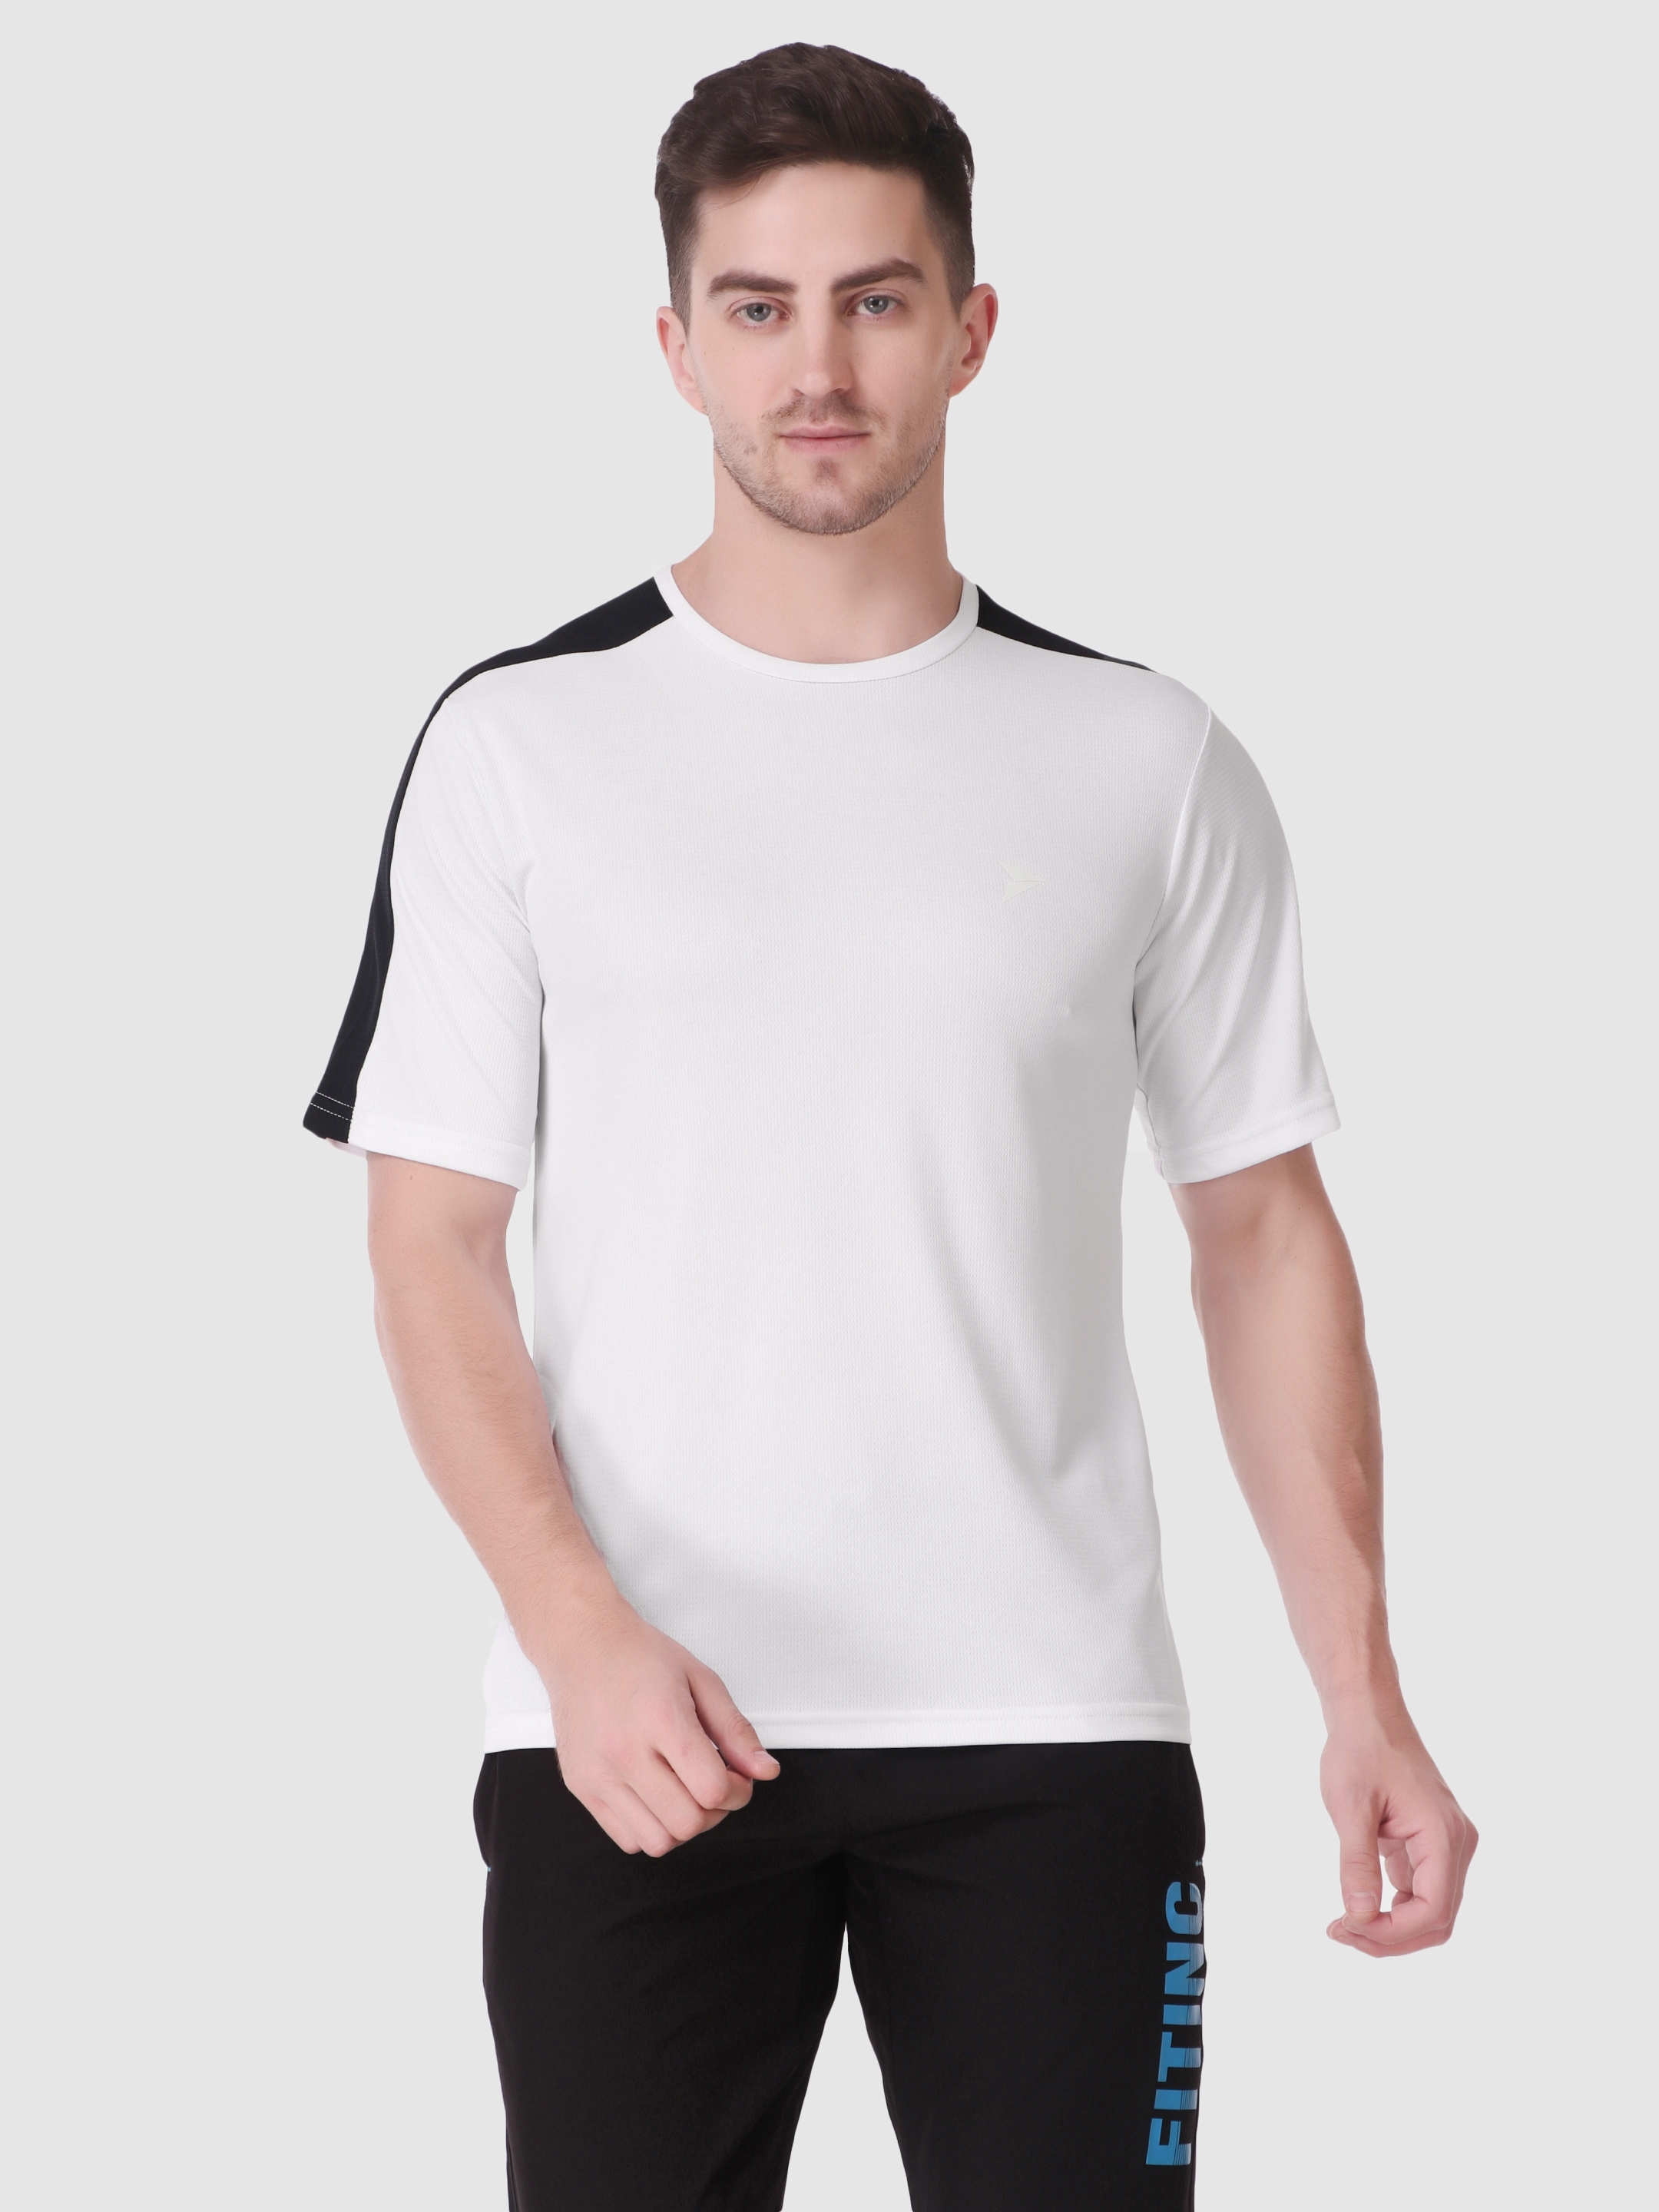 Fitinc | Fitinc White Dry Fit Sports T-Shirt